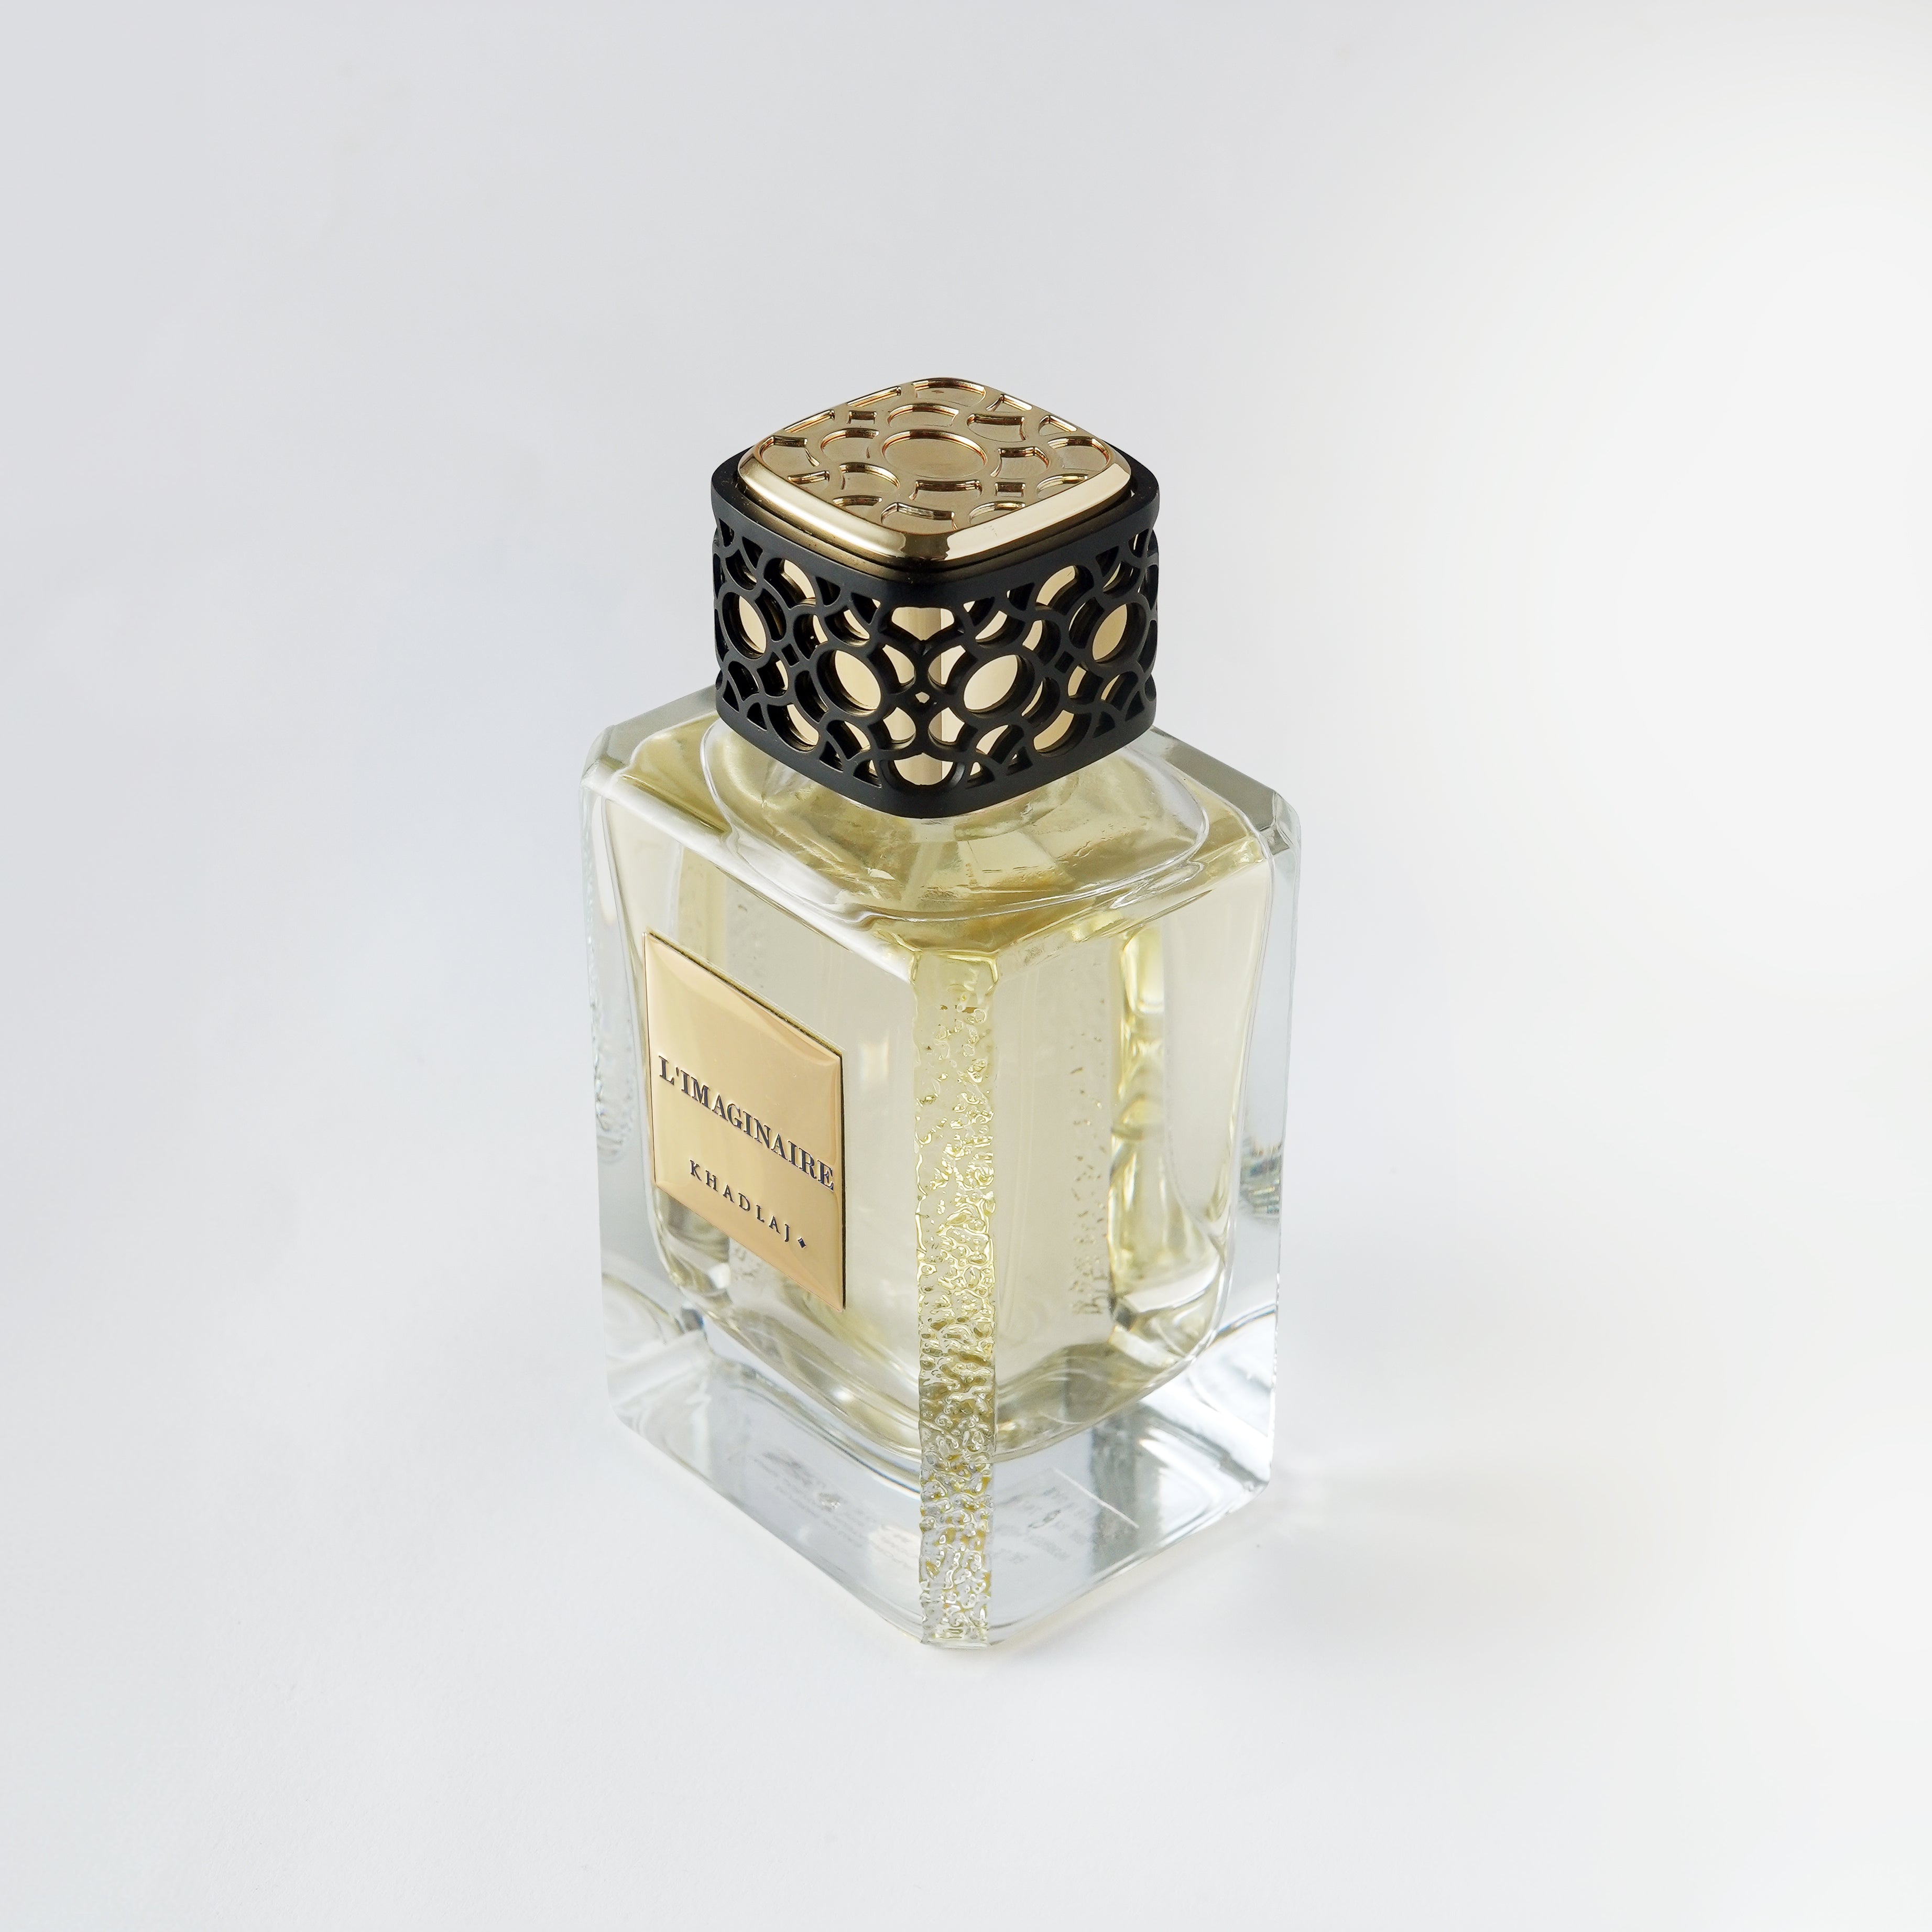 Parfum d'ambiance Maison - 100ml | ARO'MA